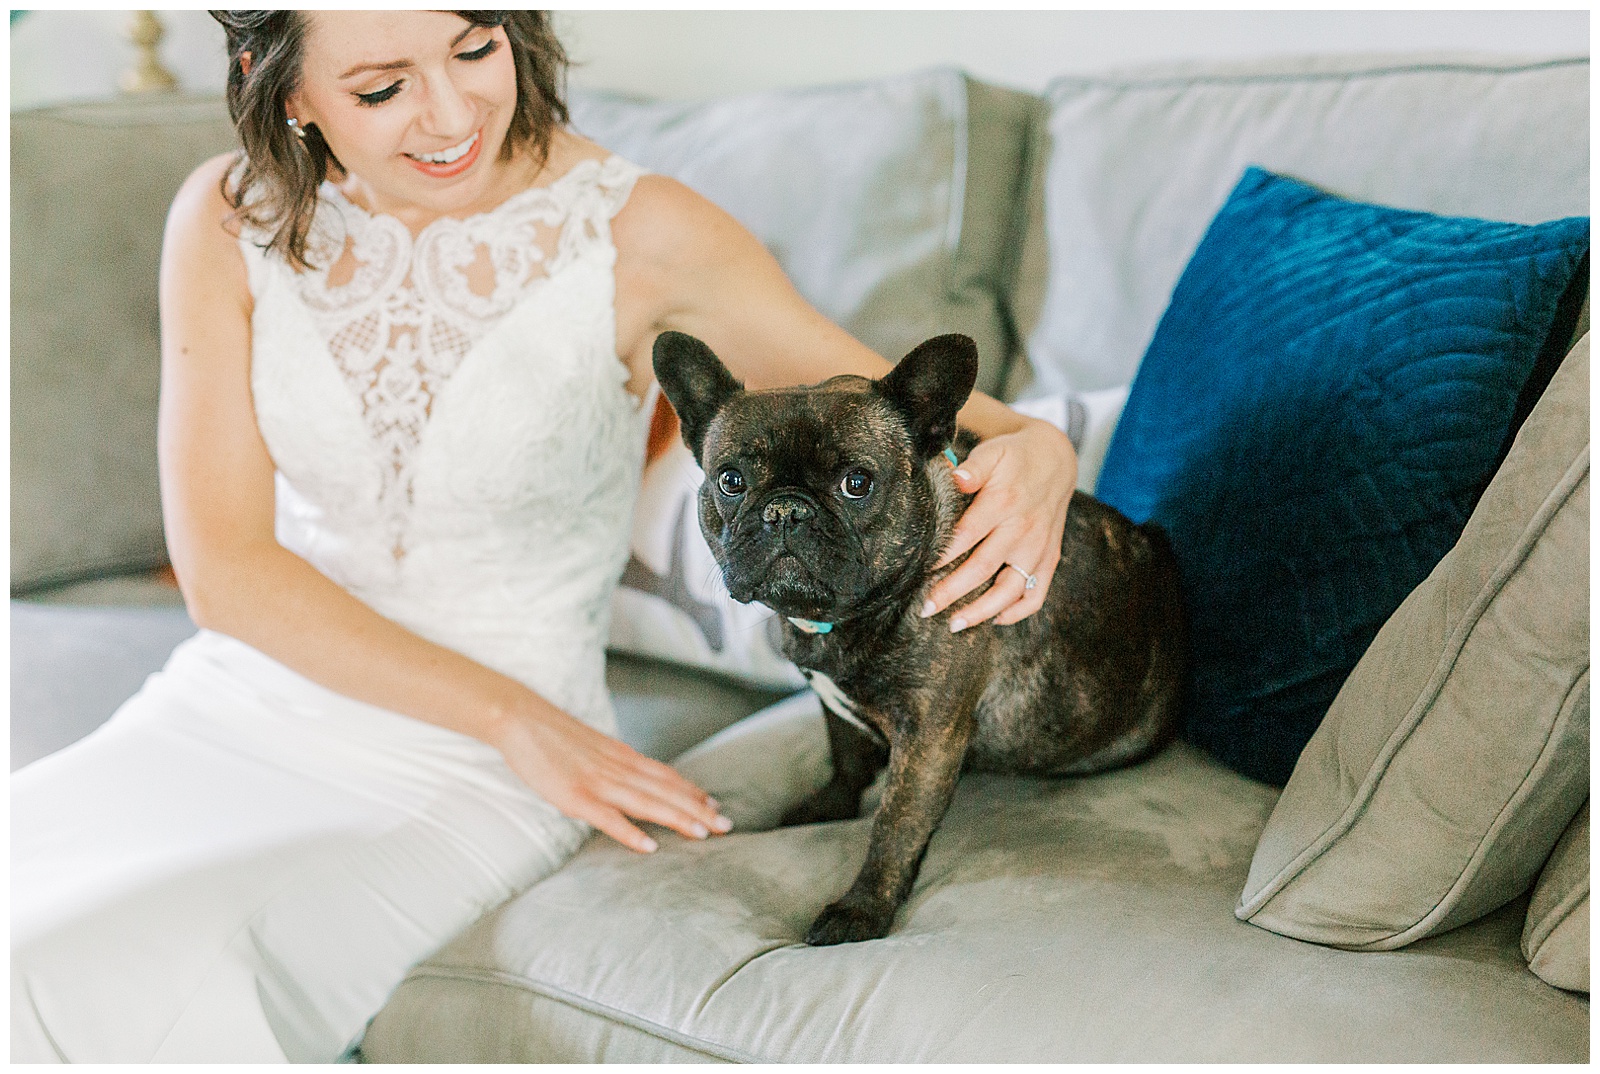 bride in lace wedding dress petting cute pug dog